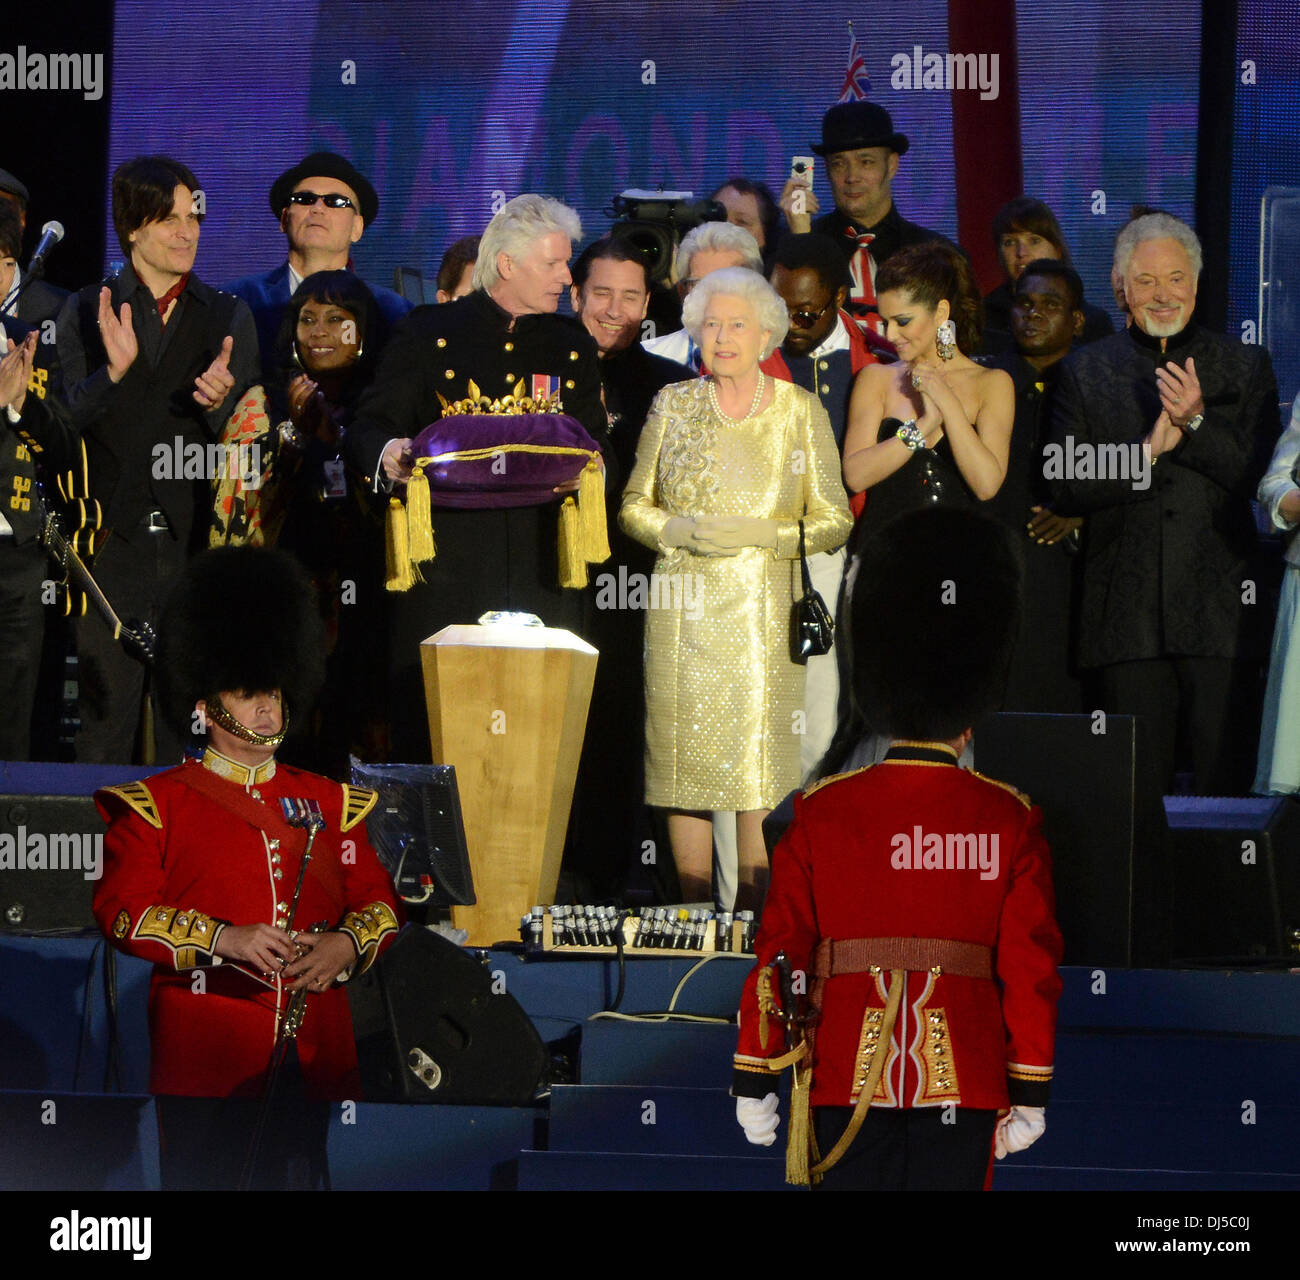 Königin Elizabeth II mit Cheryl Cole, Tom Jones, Will.i.am auf dem Diamond Jubilee-Konzert im Buckingham Palace. London, England-04.06.12 Stockfoto